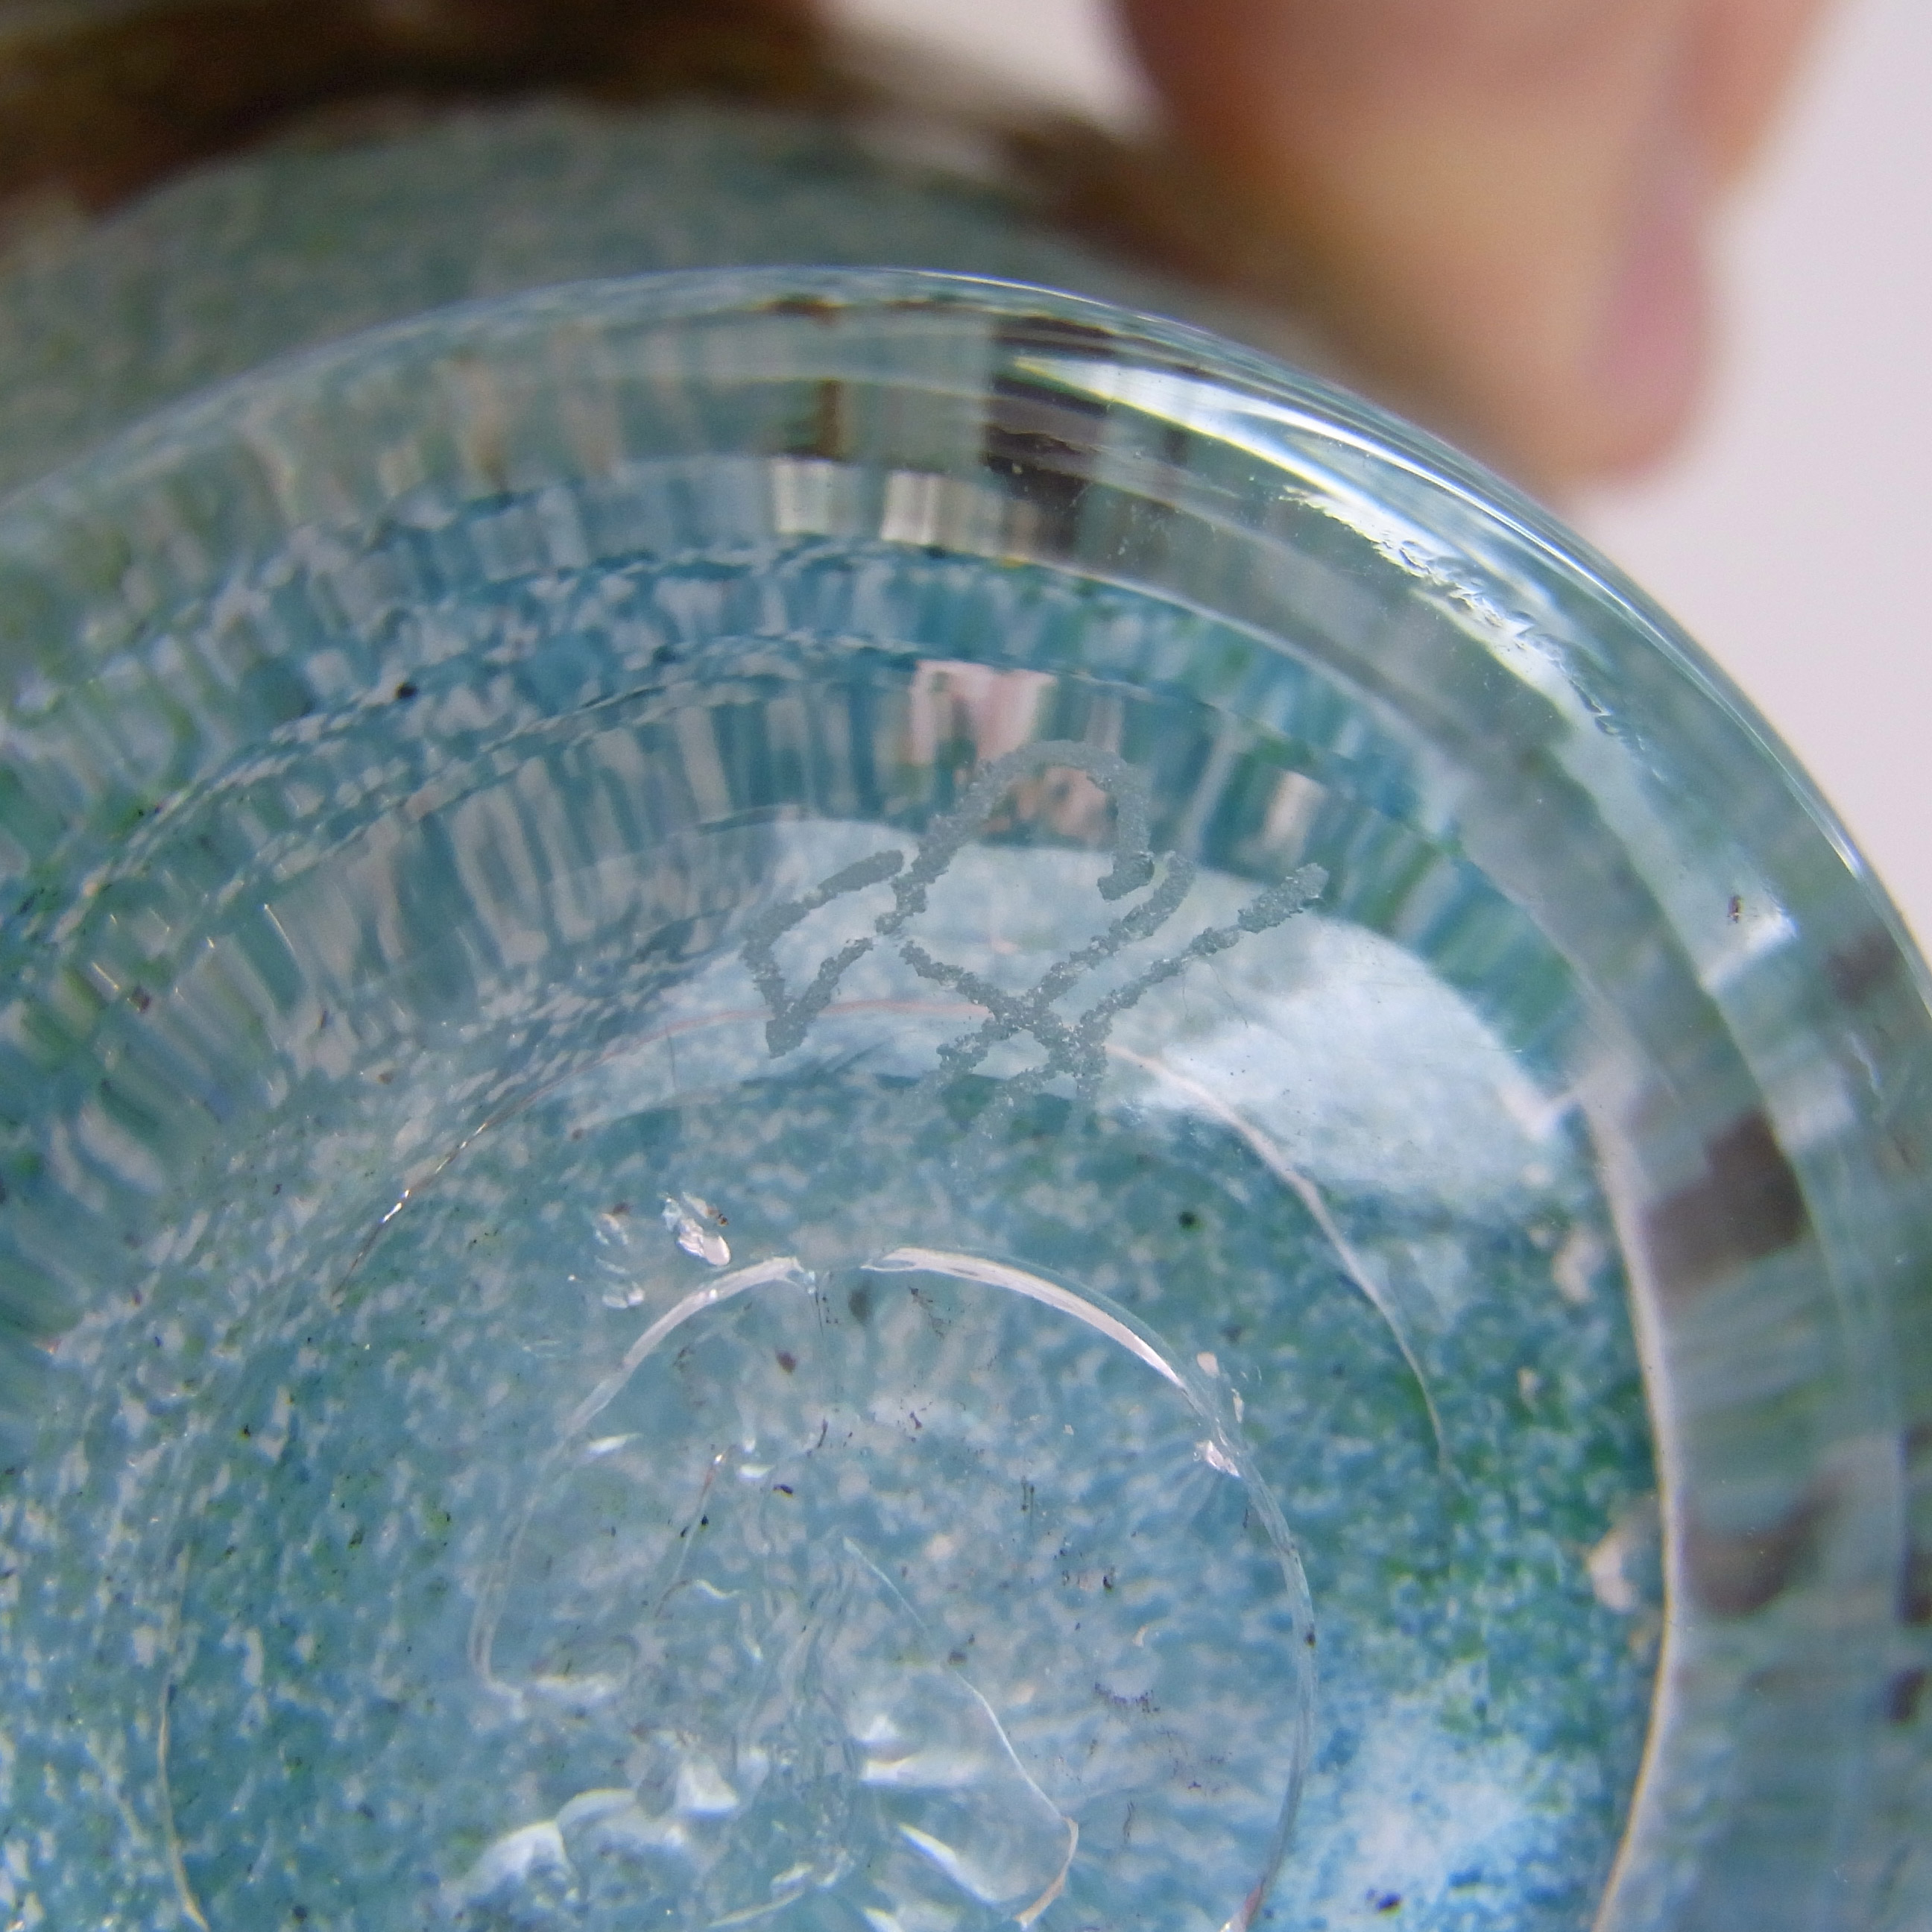 SIGNED & LABELLED Hammar Glashytta Blue & White Glass Bowl - Click Image to Close